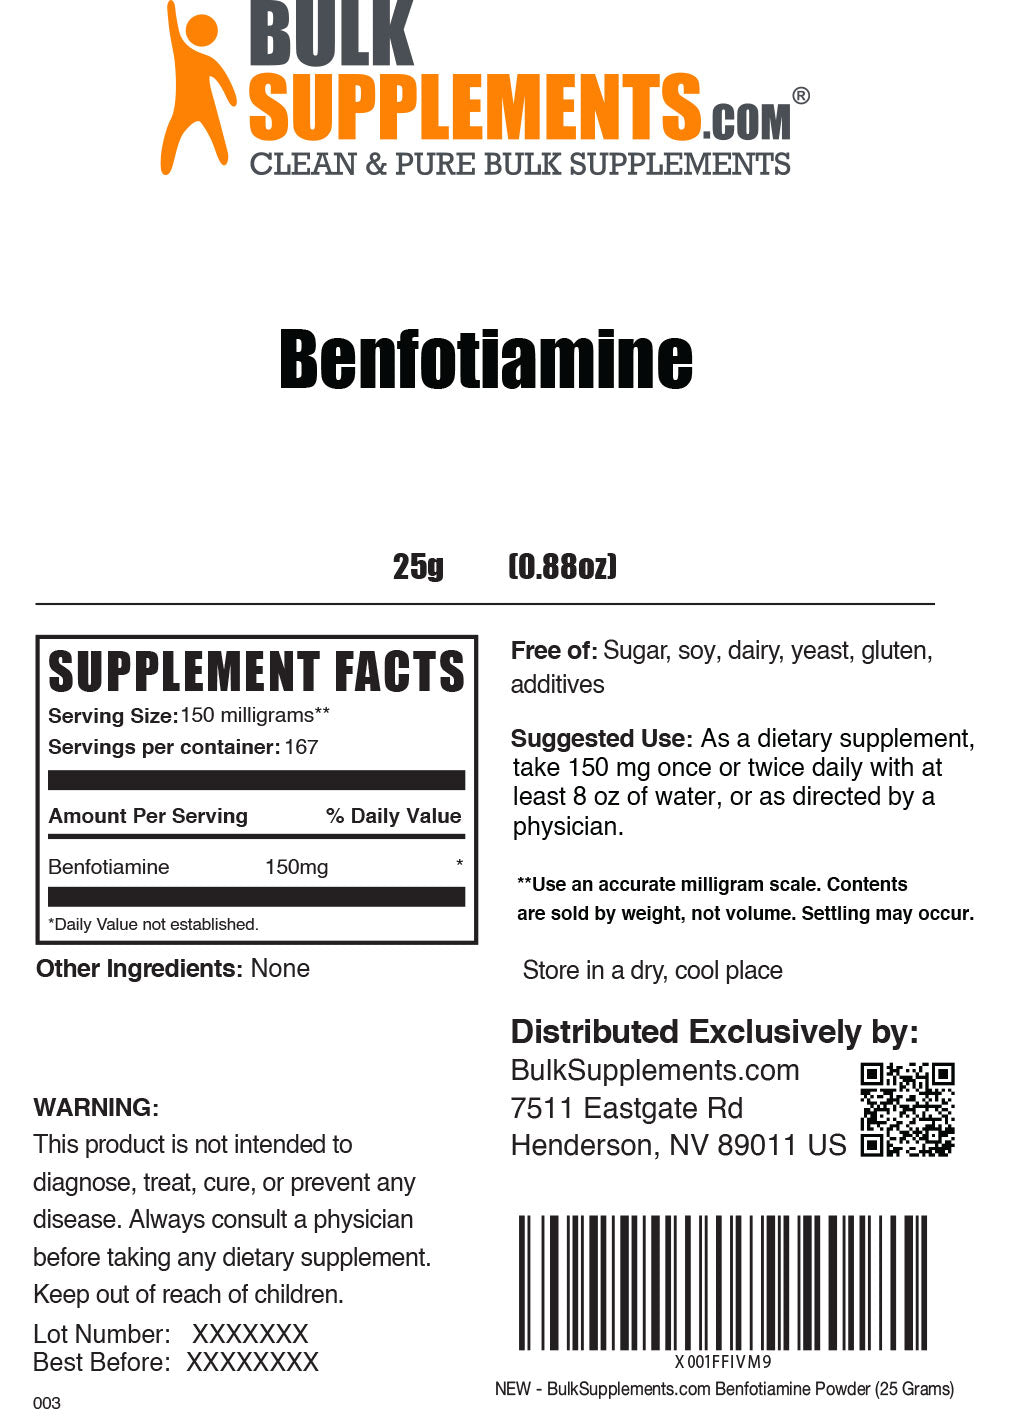 Benfotiamine powder label 25g